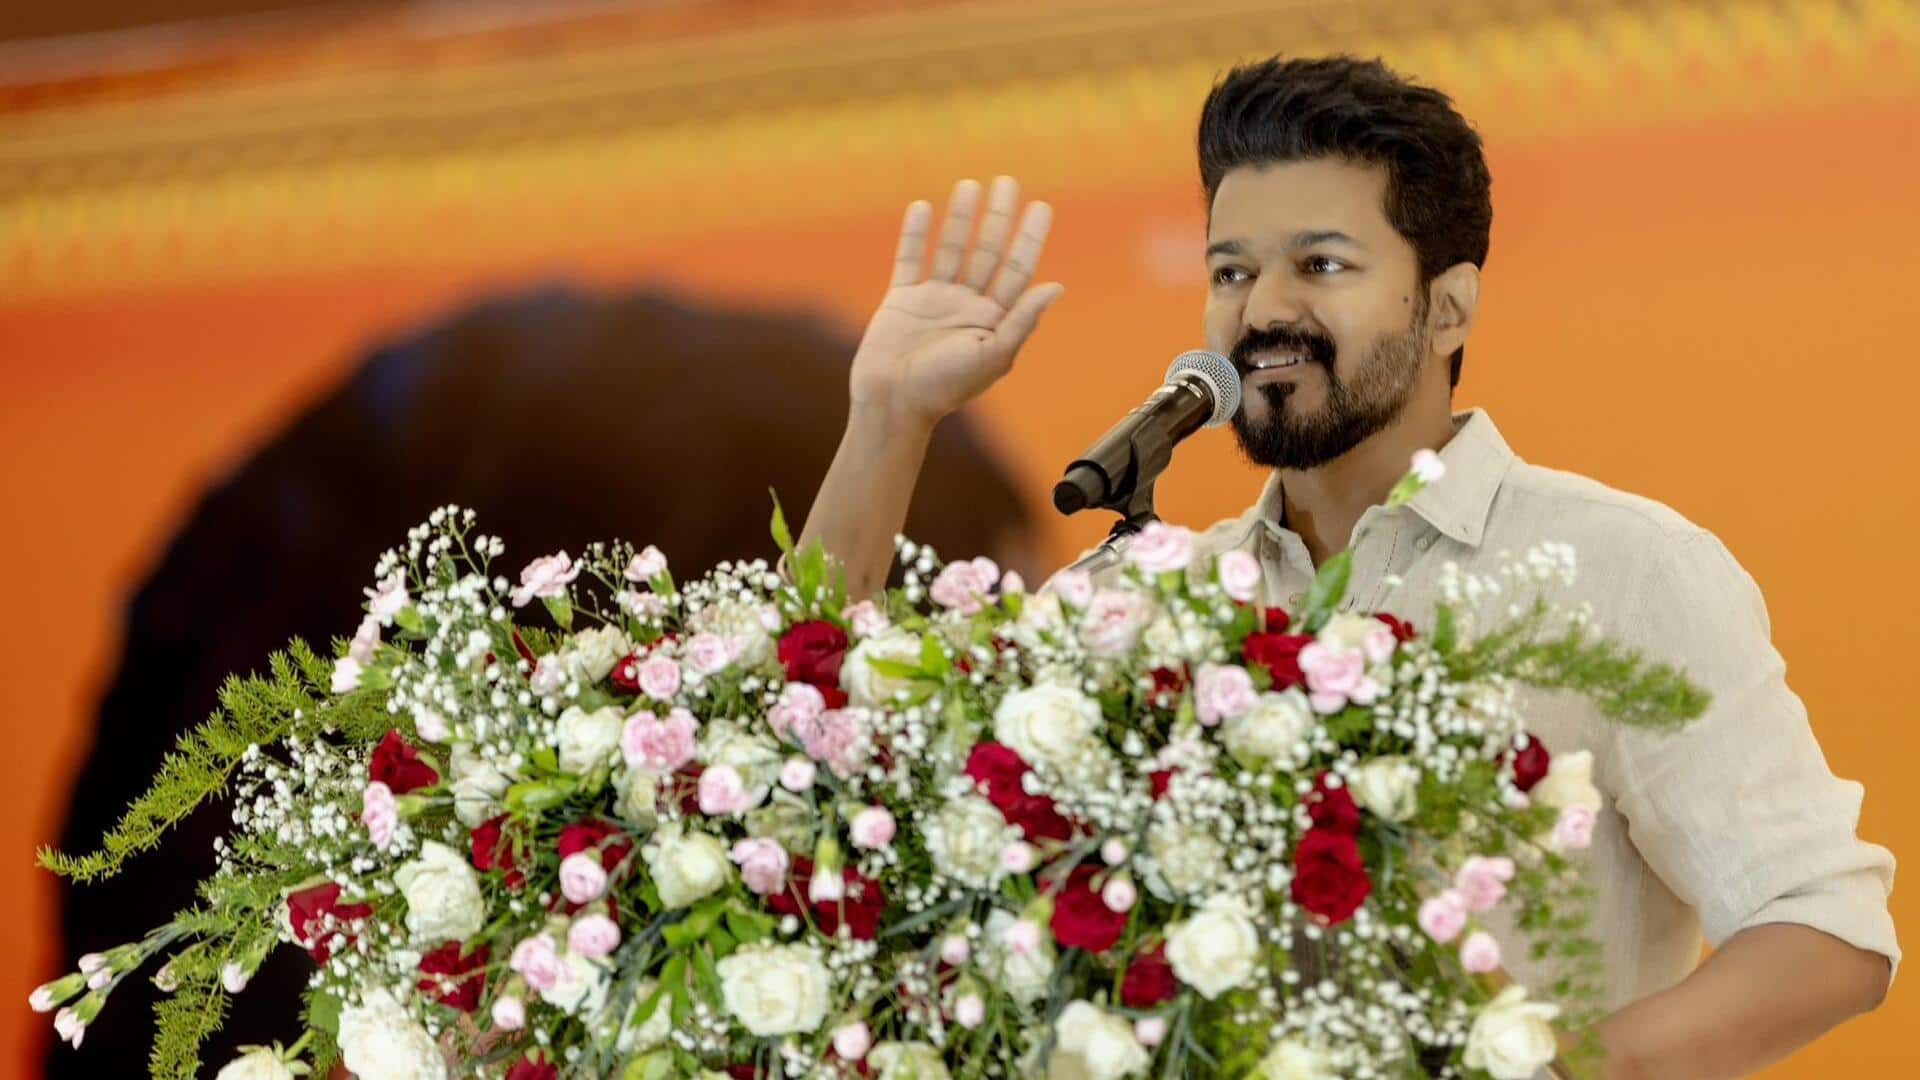 तमिल सुपरस्टार थलापति विजय ने राजनीतिक पार्टी लॉन्च की, रखा 'तमिझागा वेत्री कड़गम' नाम